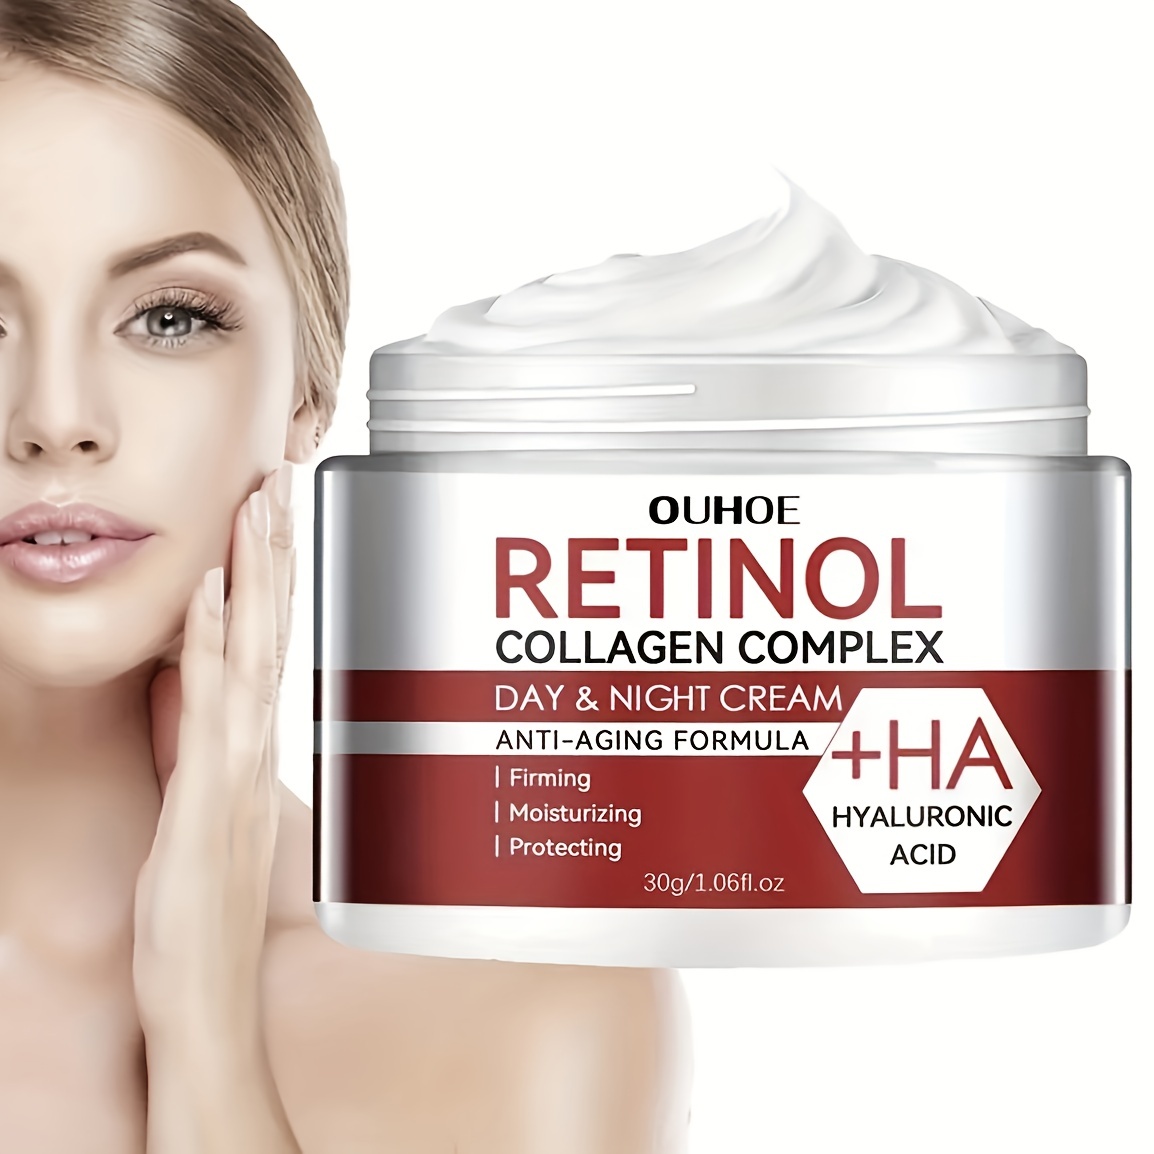 Retinol Collagen Complex Day & Night Cream Moisturizing Face Cream,  Increase Skin Elastictiy, Firming Skin, Protect The Skin's Moisture  Barrier, Promo